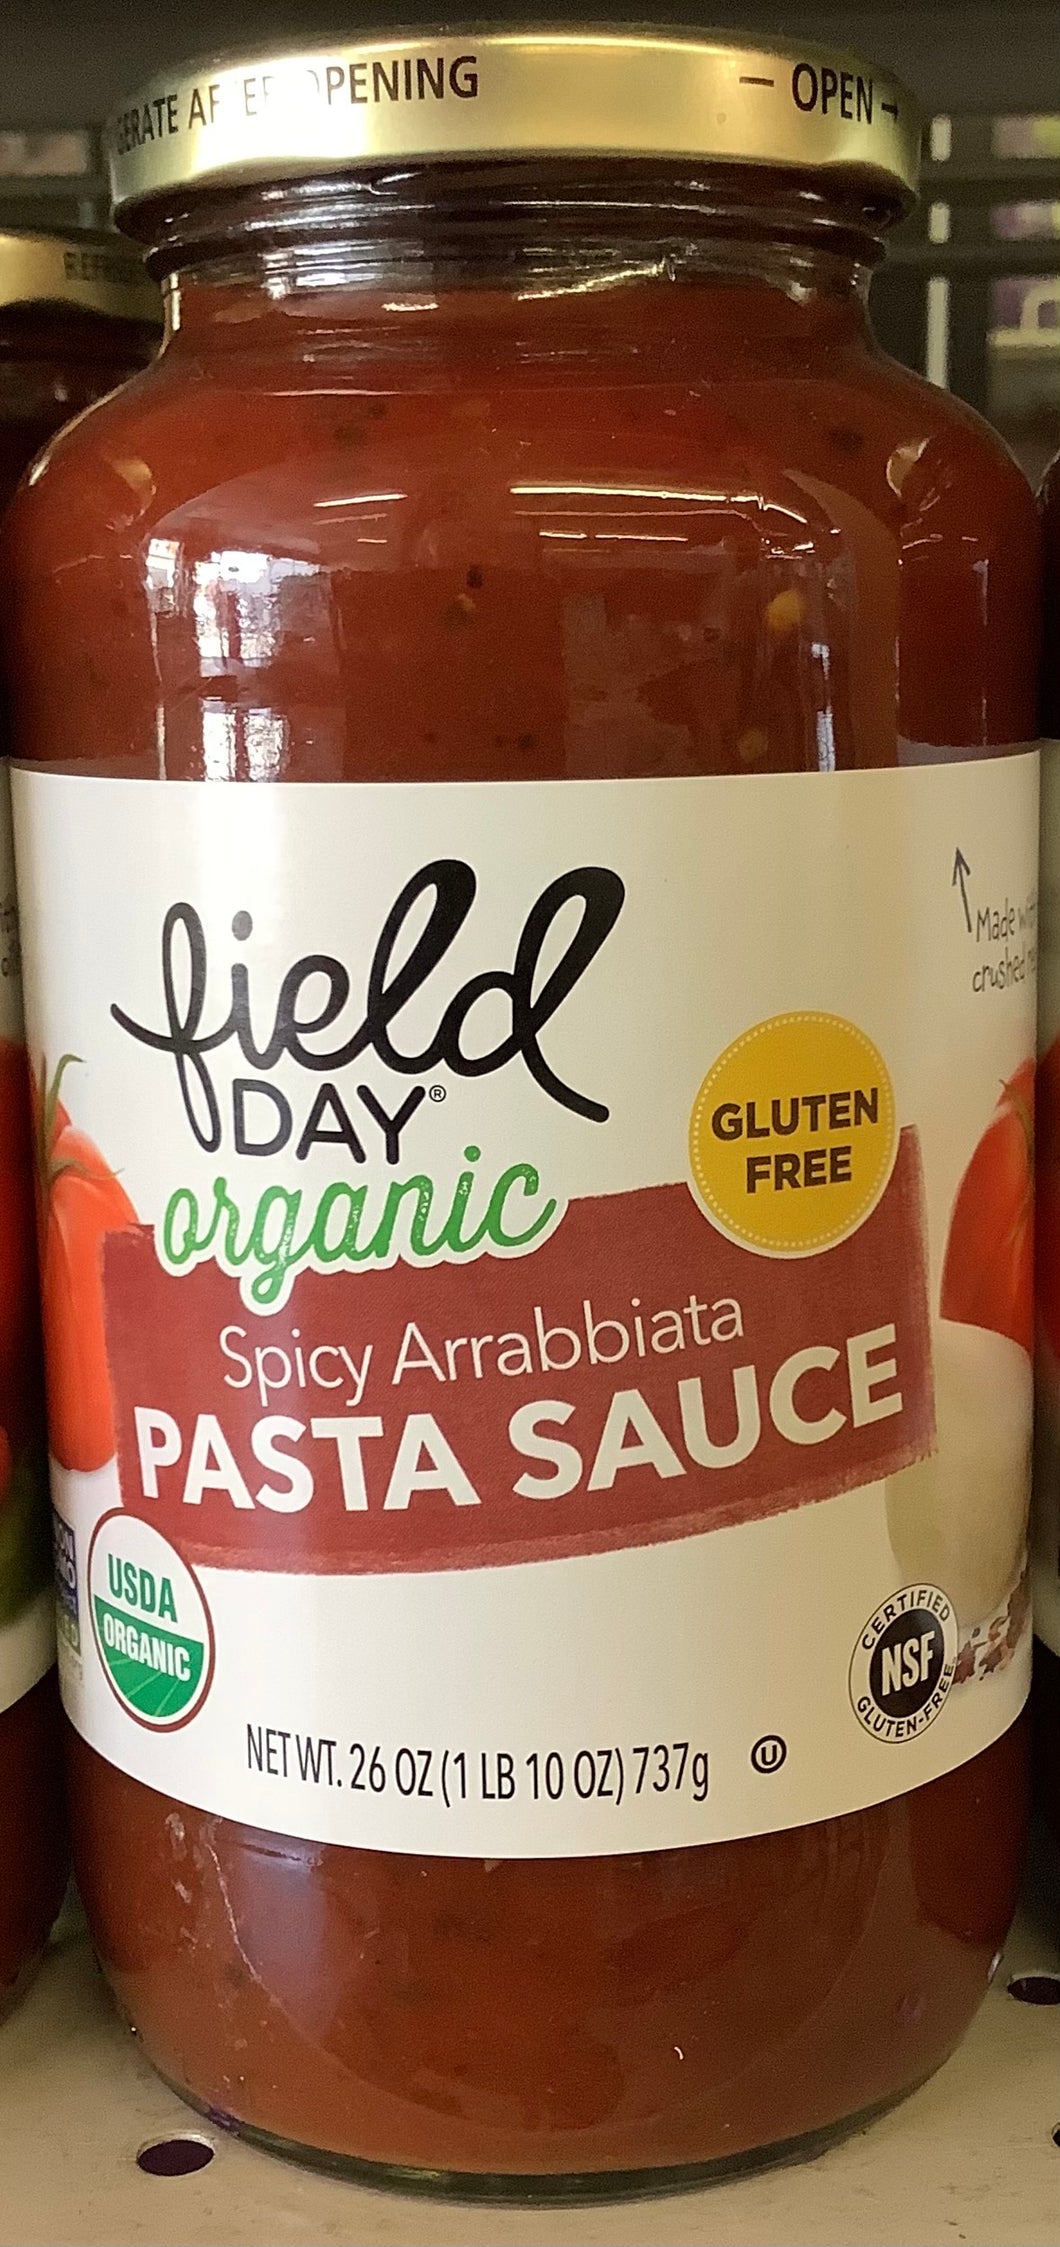 Pasta Sauce, Spicy Arrabbiata, Field Day, Organic